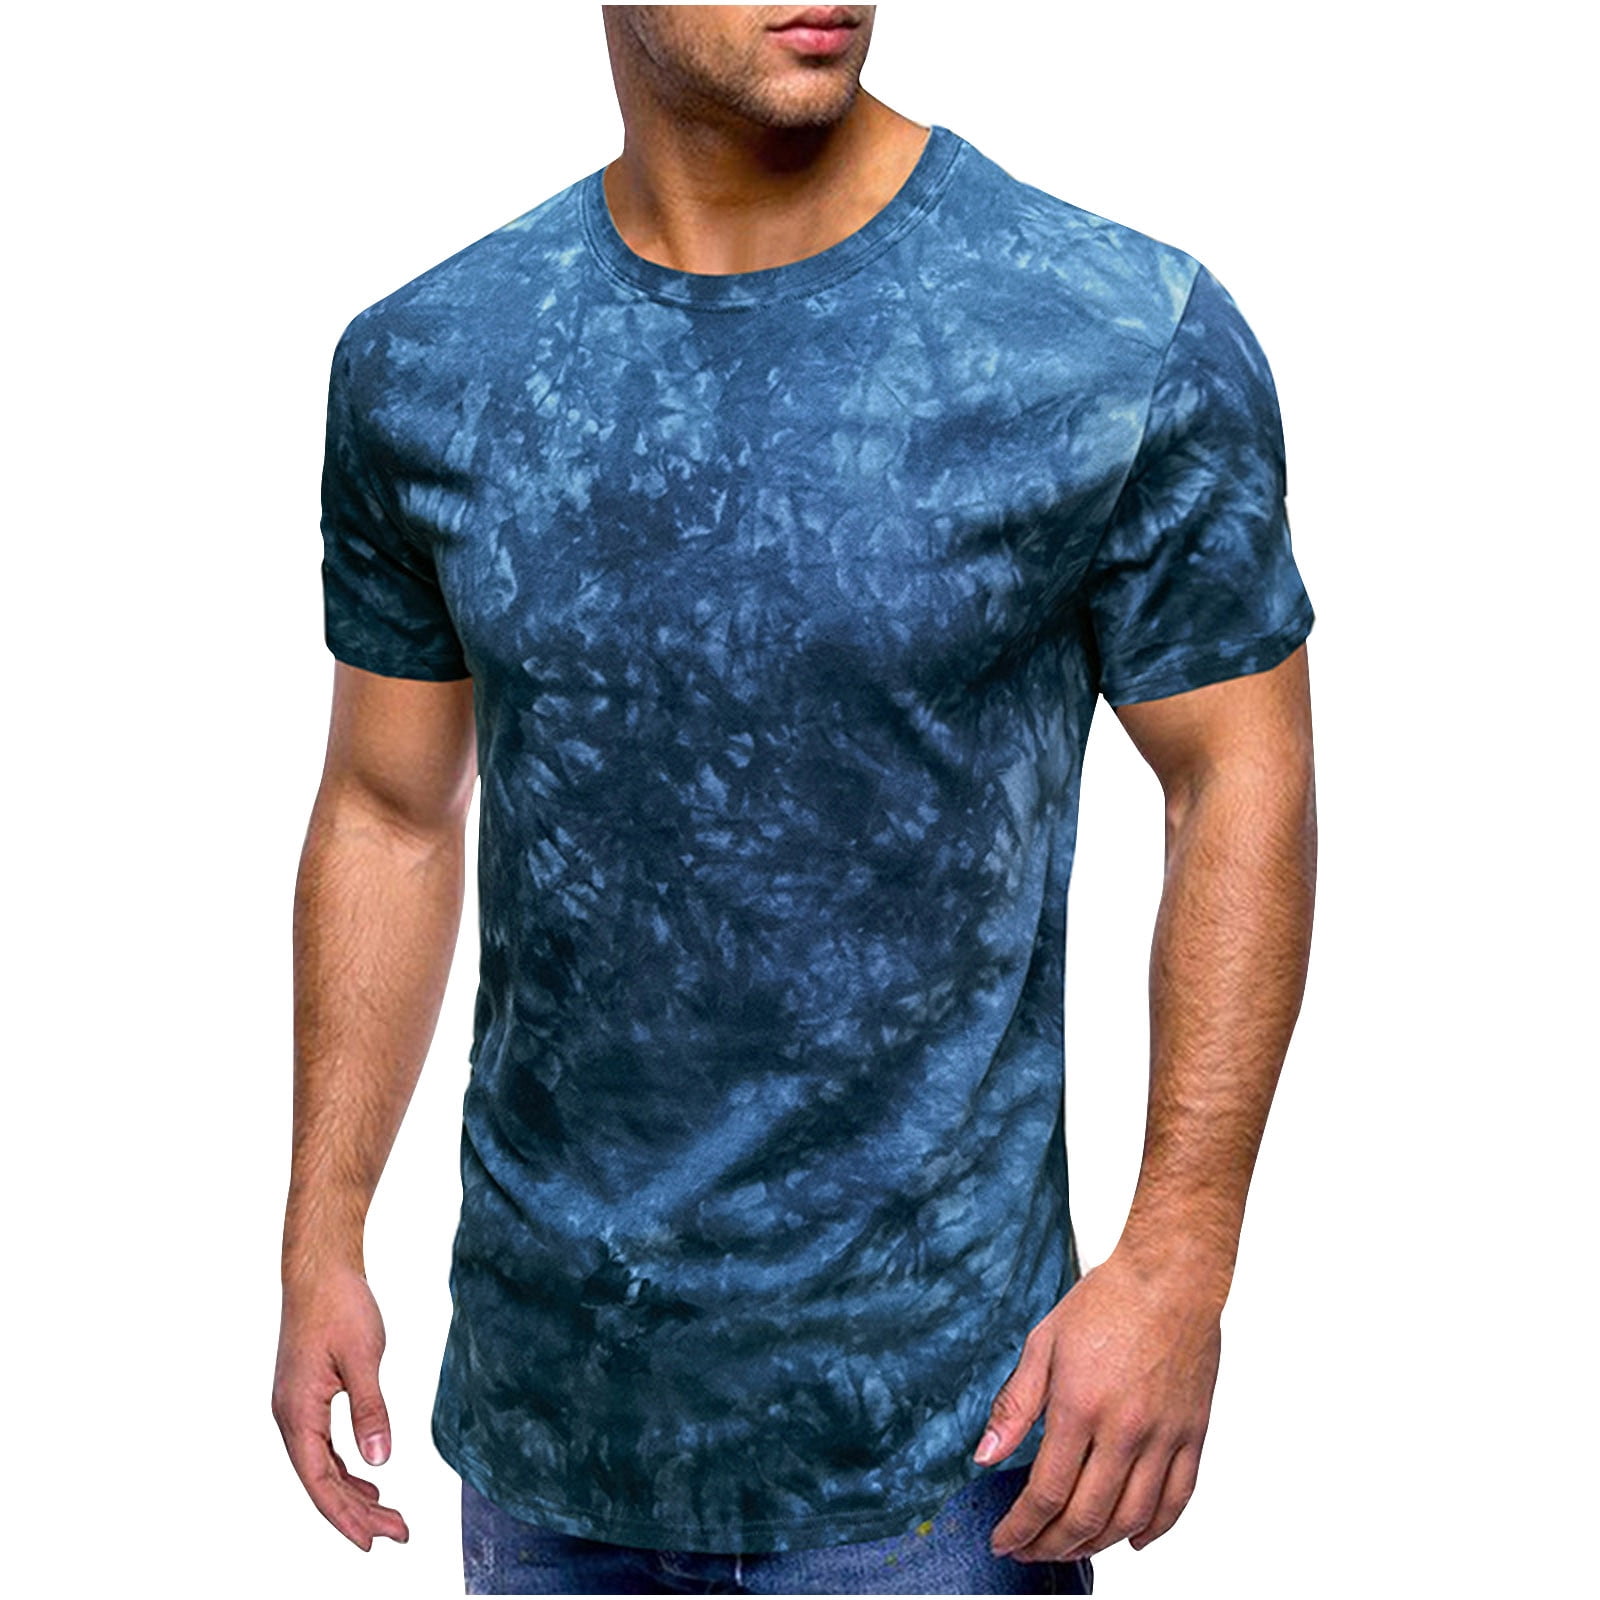  Jyeity t Shirt for Men Mens Short Sleeve Shirts Casual  Irregular Graphic T-Shirt Loose Tee Shirts Summer Fashion Athletic Shirt  Tops Deals of The Day Mens t Shirt Blue XL 